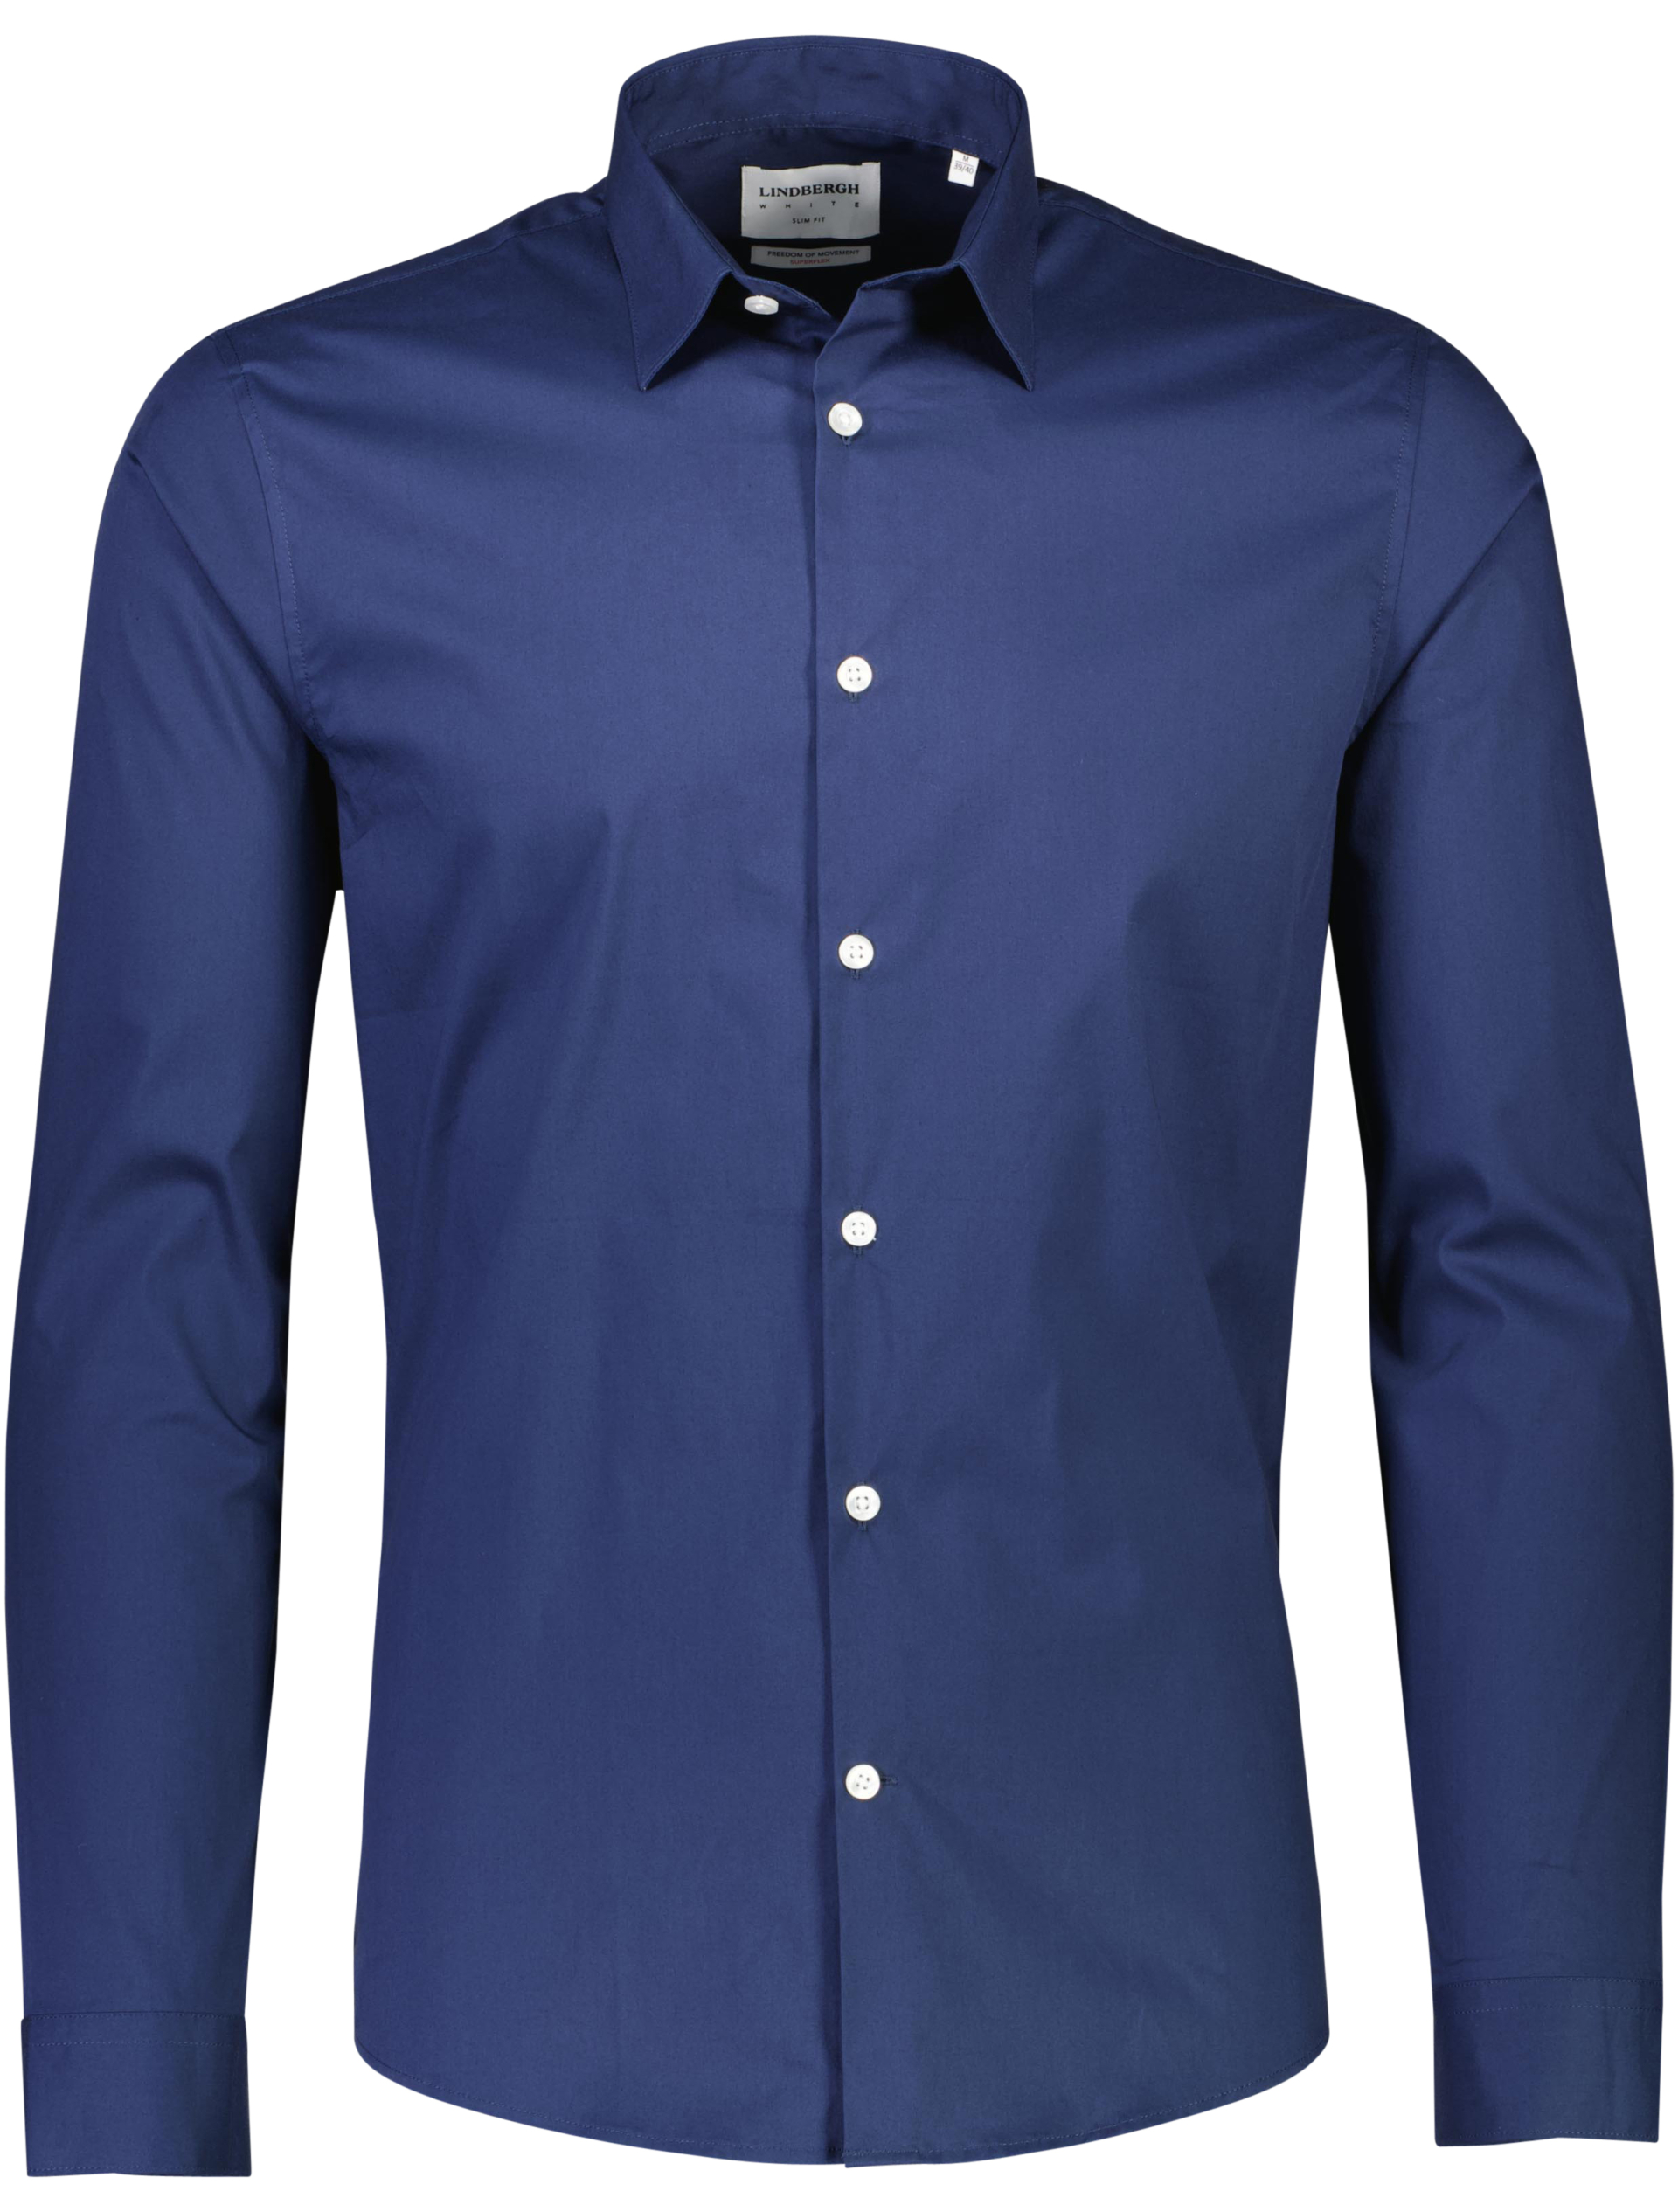 Lindbergh Business casual skjorte blå / naval blue